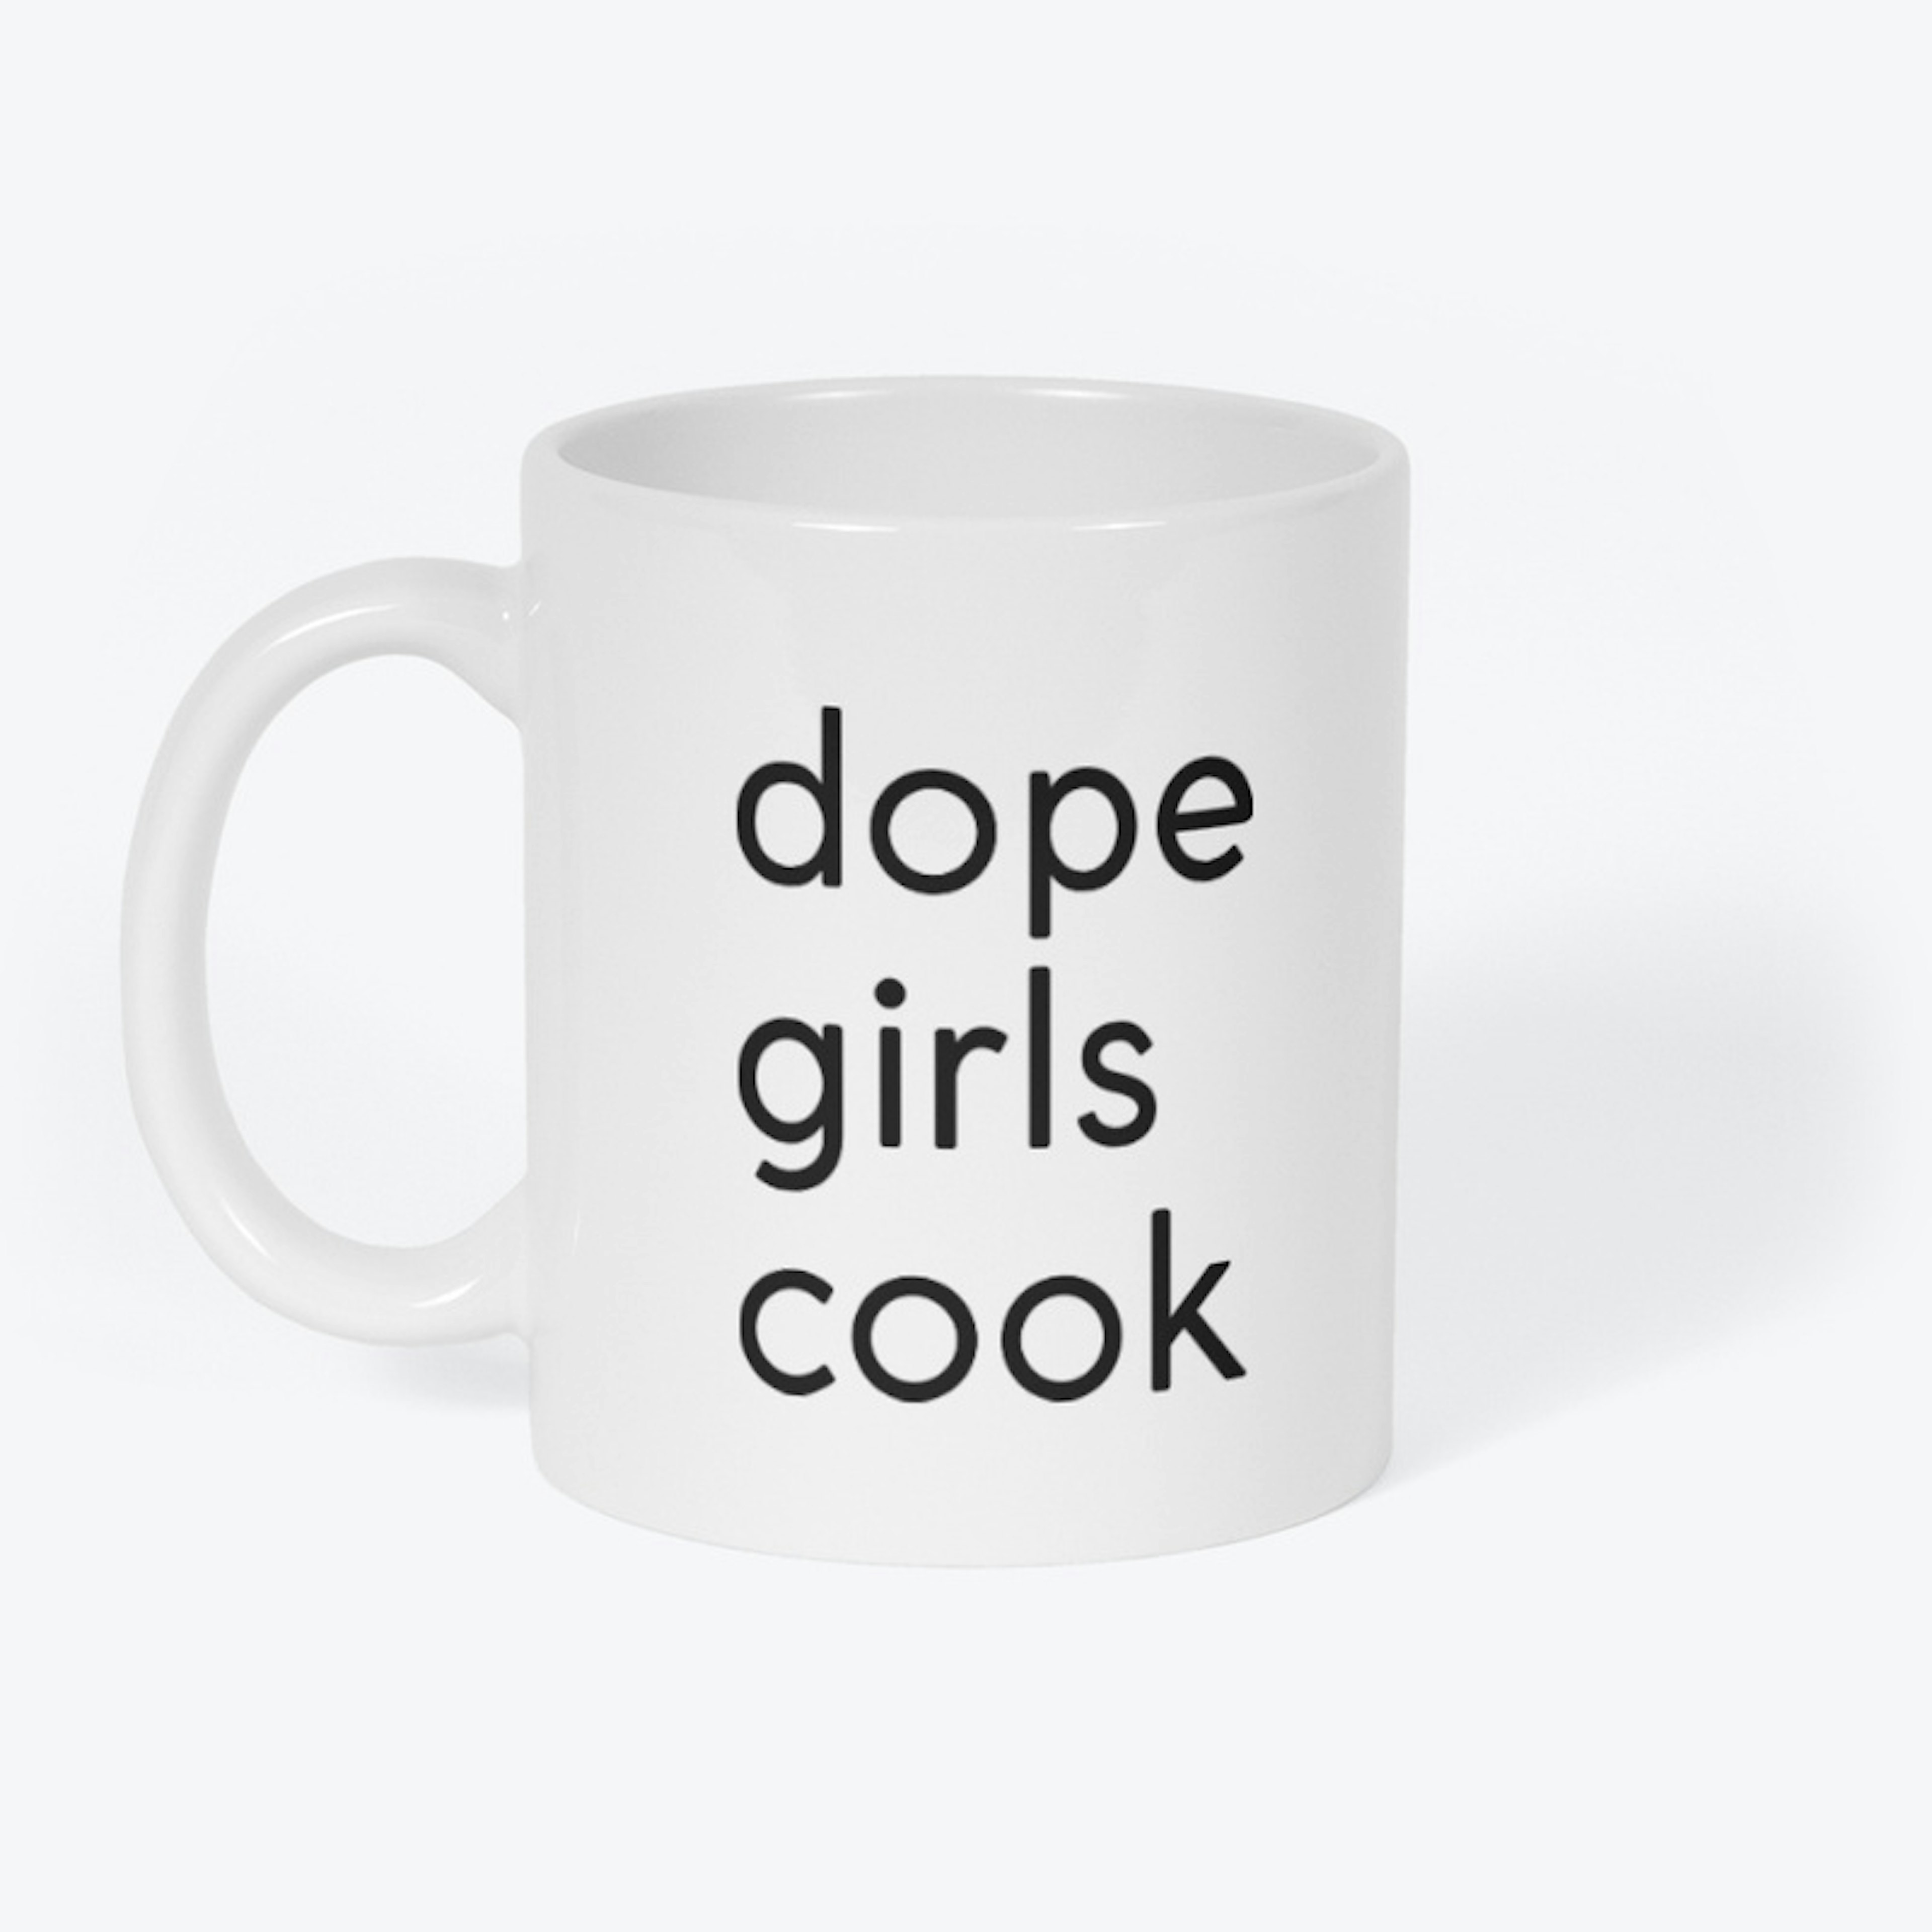 #dopegirlscook coffee mug 